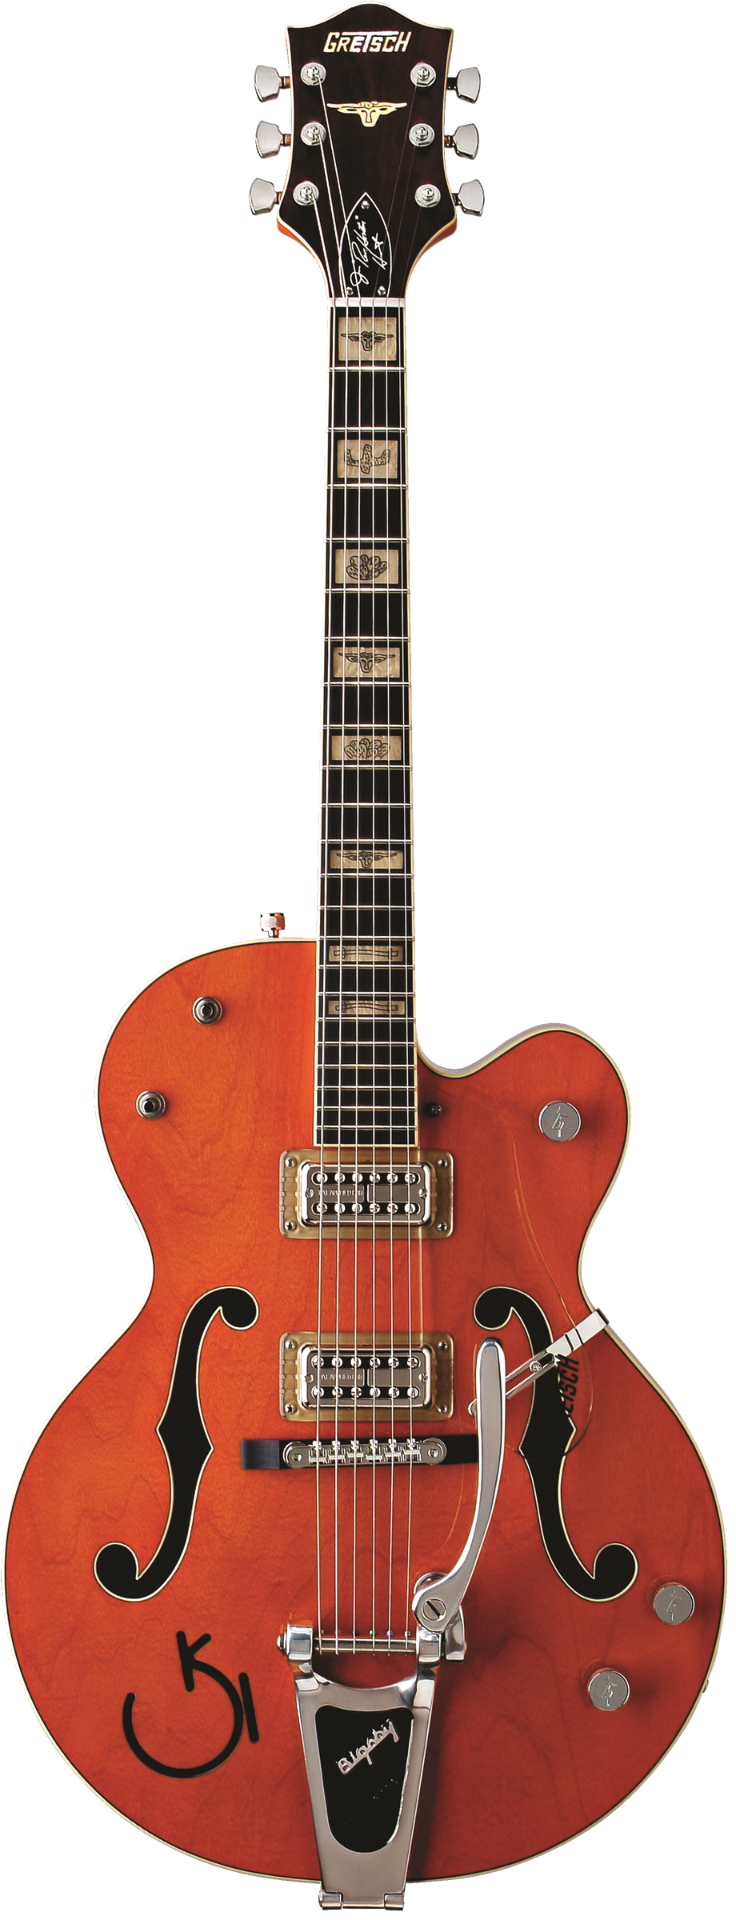 Gretsch G6120RHH Reverend Horton Heat Signature Electric Guitar Orange Stain